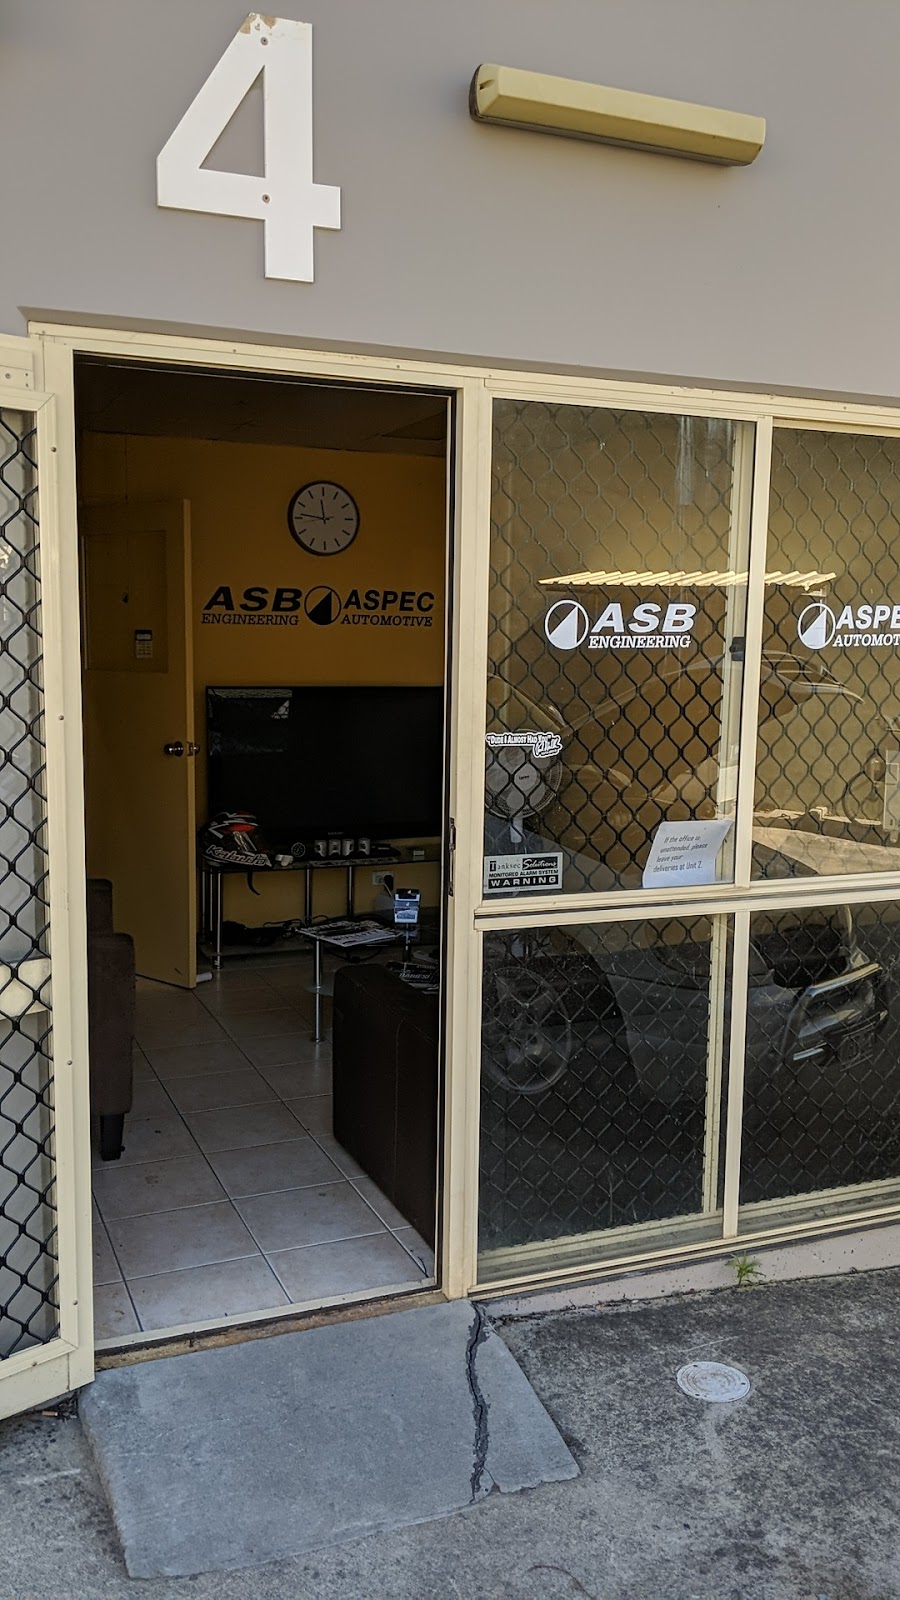 ASPEC AUTOMOTIVE | car repair | AU Queensland, 4 Maiella St, Stapylton QLD 4207, Australia | 0401521330 OR +61 401 521 330